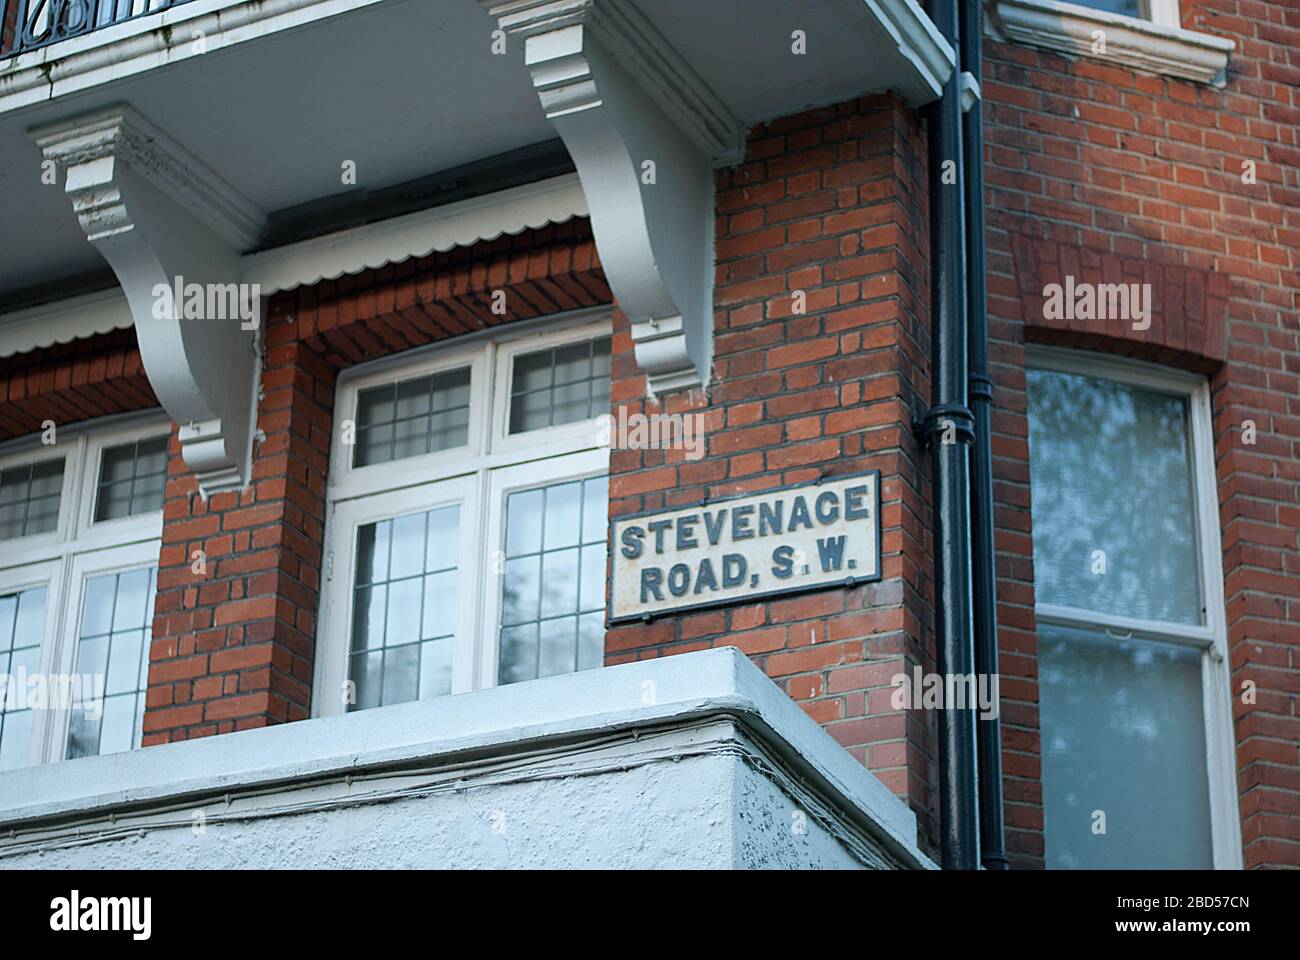 Stevenage Road Street Sign Fulham, Londres, Royaume-Uni Banque D'Images